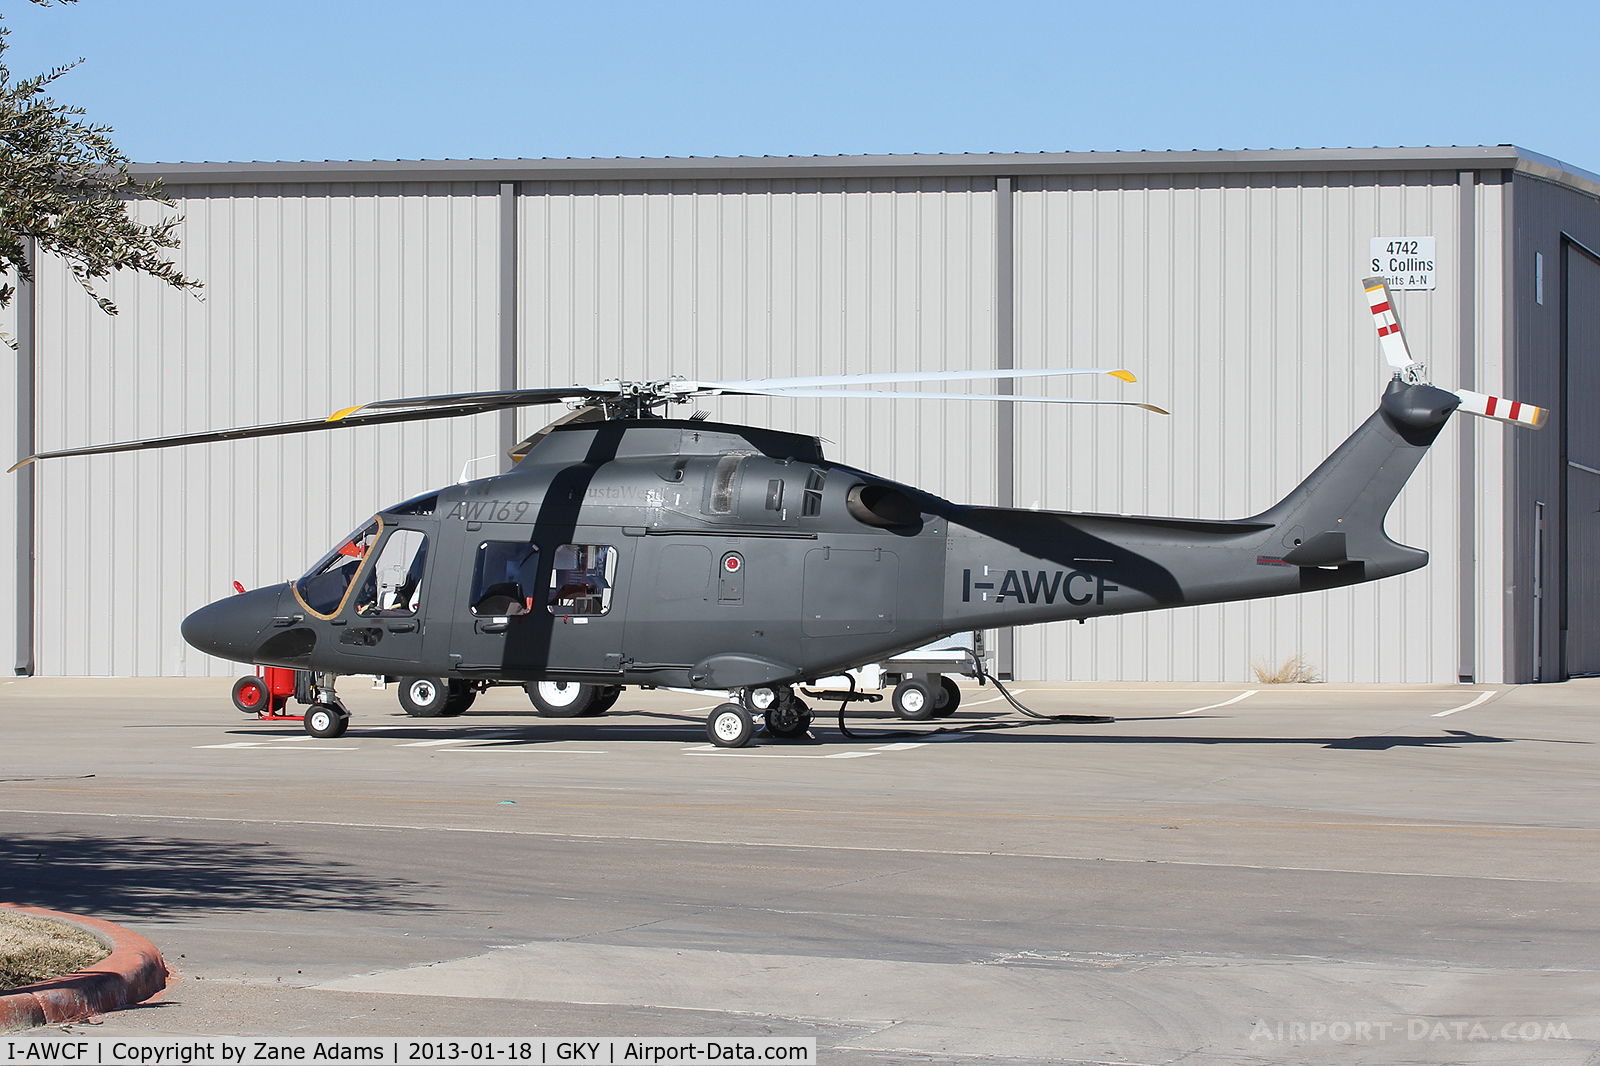 I-AWCF, 2012 AgustaWestland AW169 C/N 69003, At the Agusta Westland Hangar at Arlington Municipal Airport